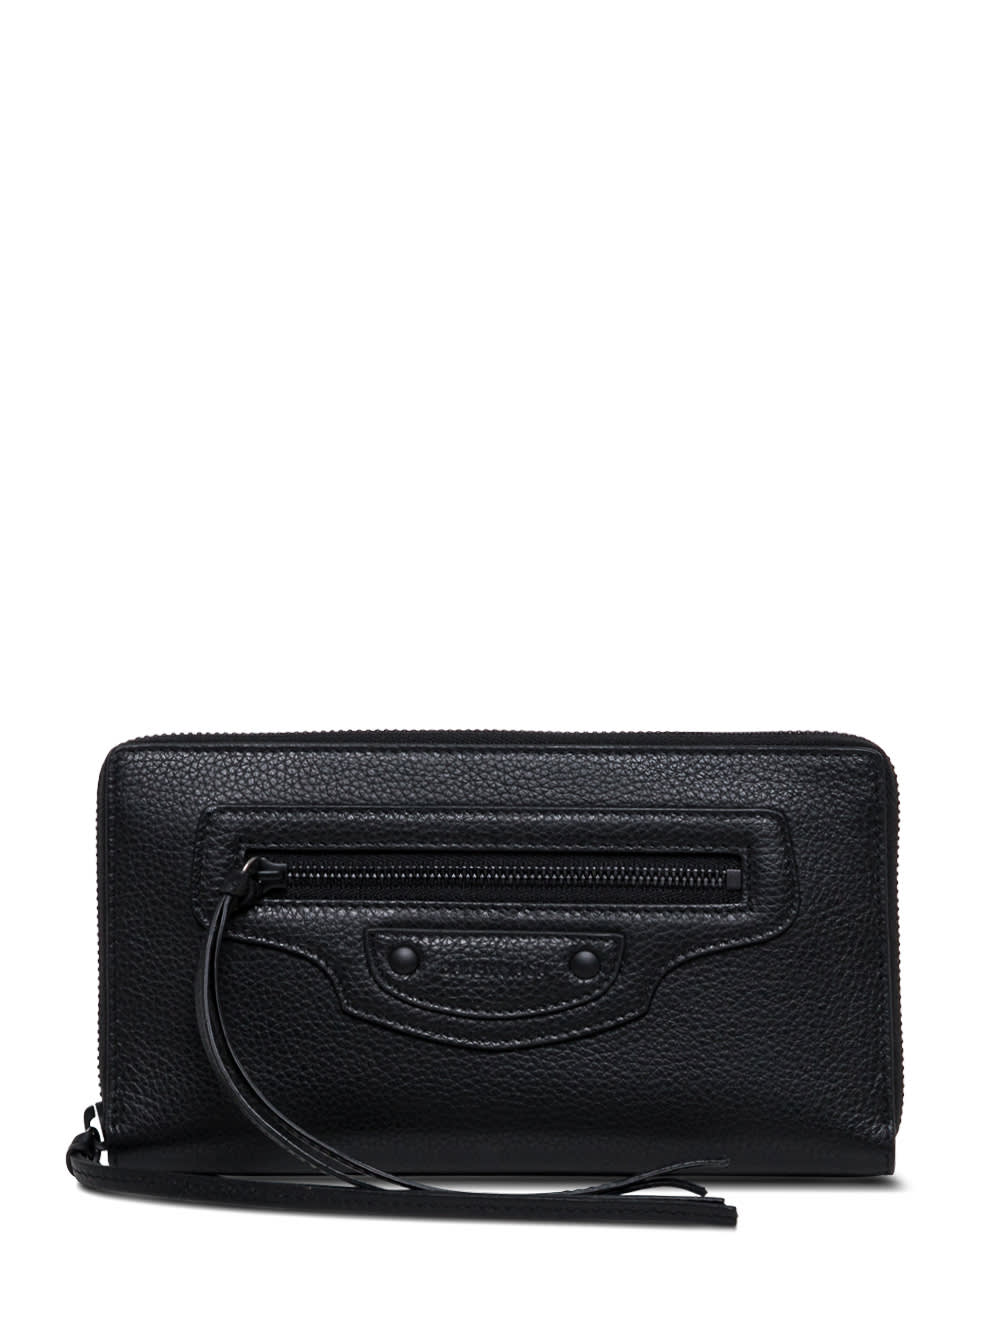 Balenciaga Neo Classic Black Leather Wallet